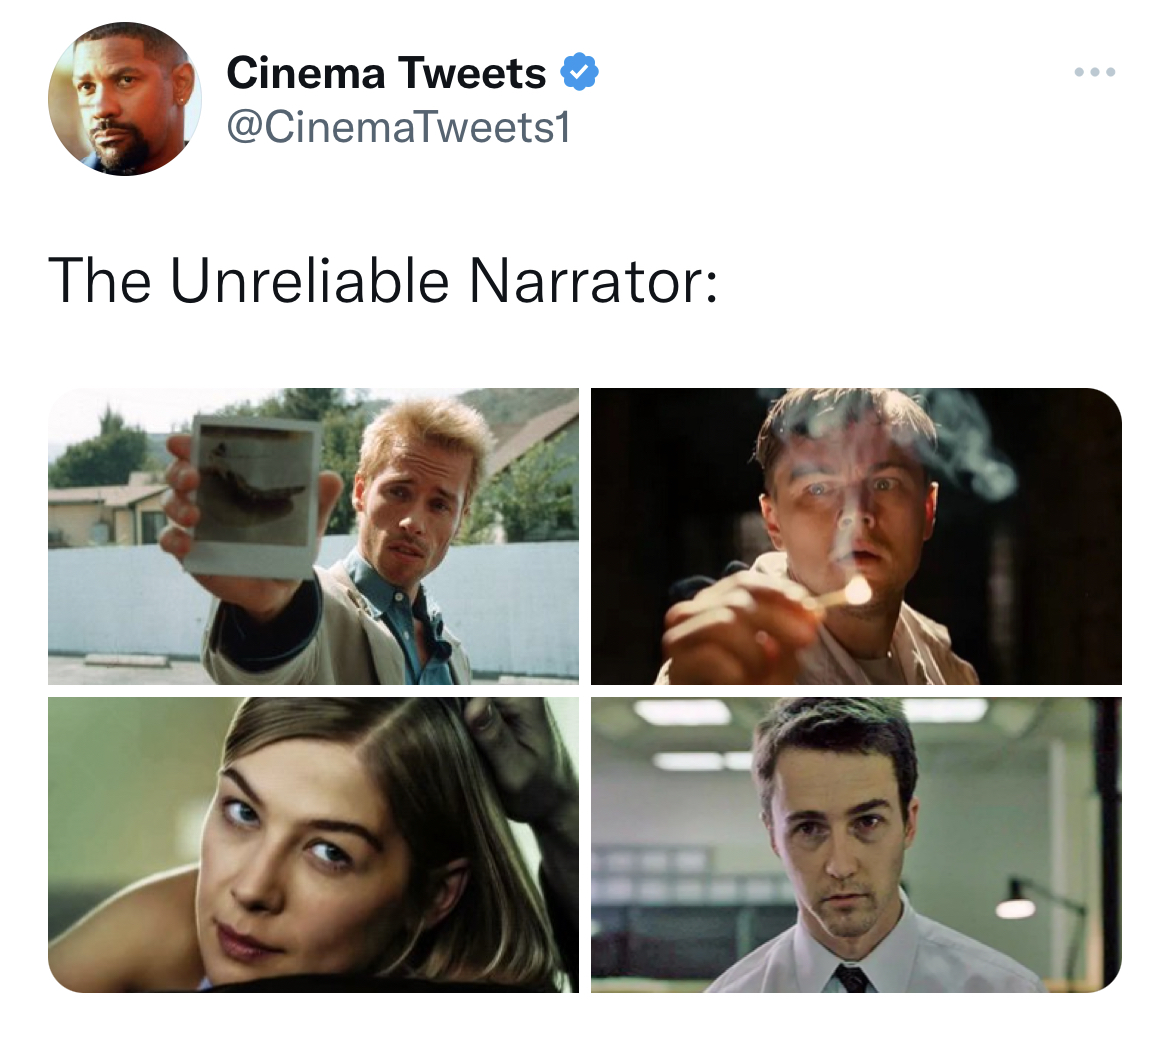 tweets dunking on celebs - human behavior - Cinema Tweets The Unreliable Narrator